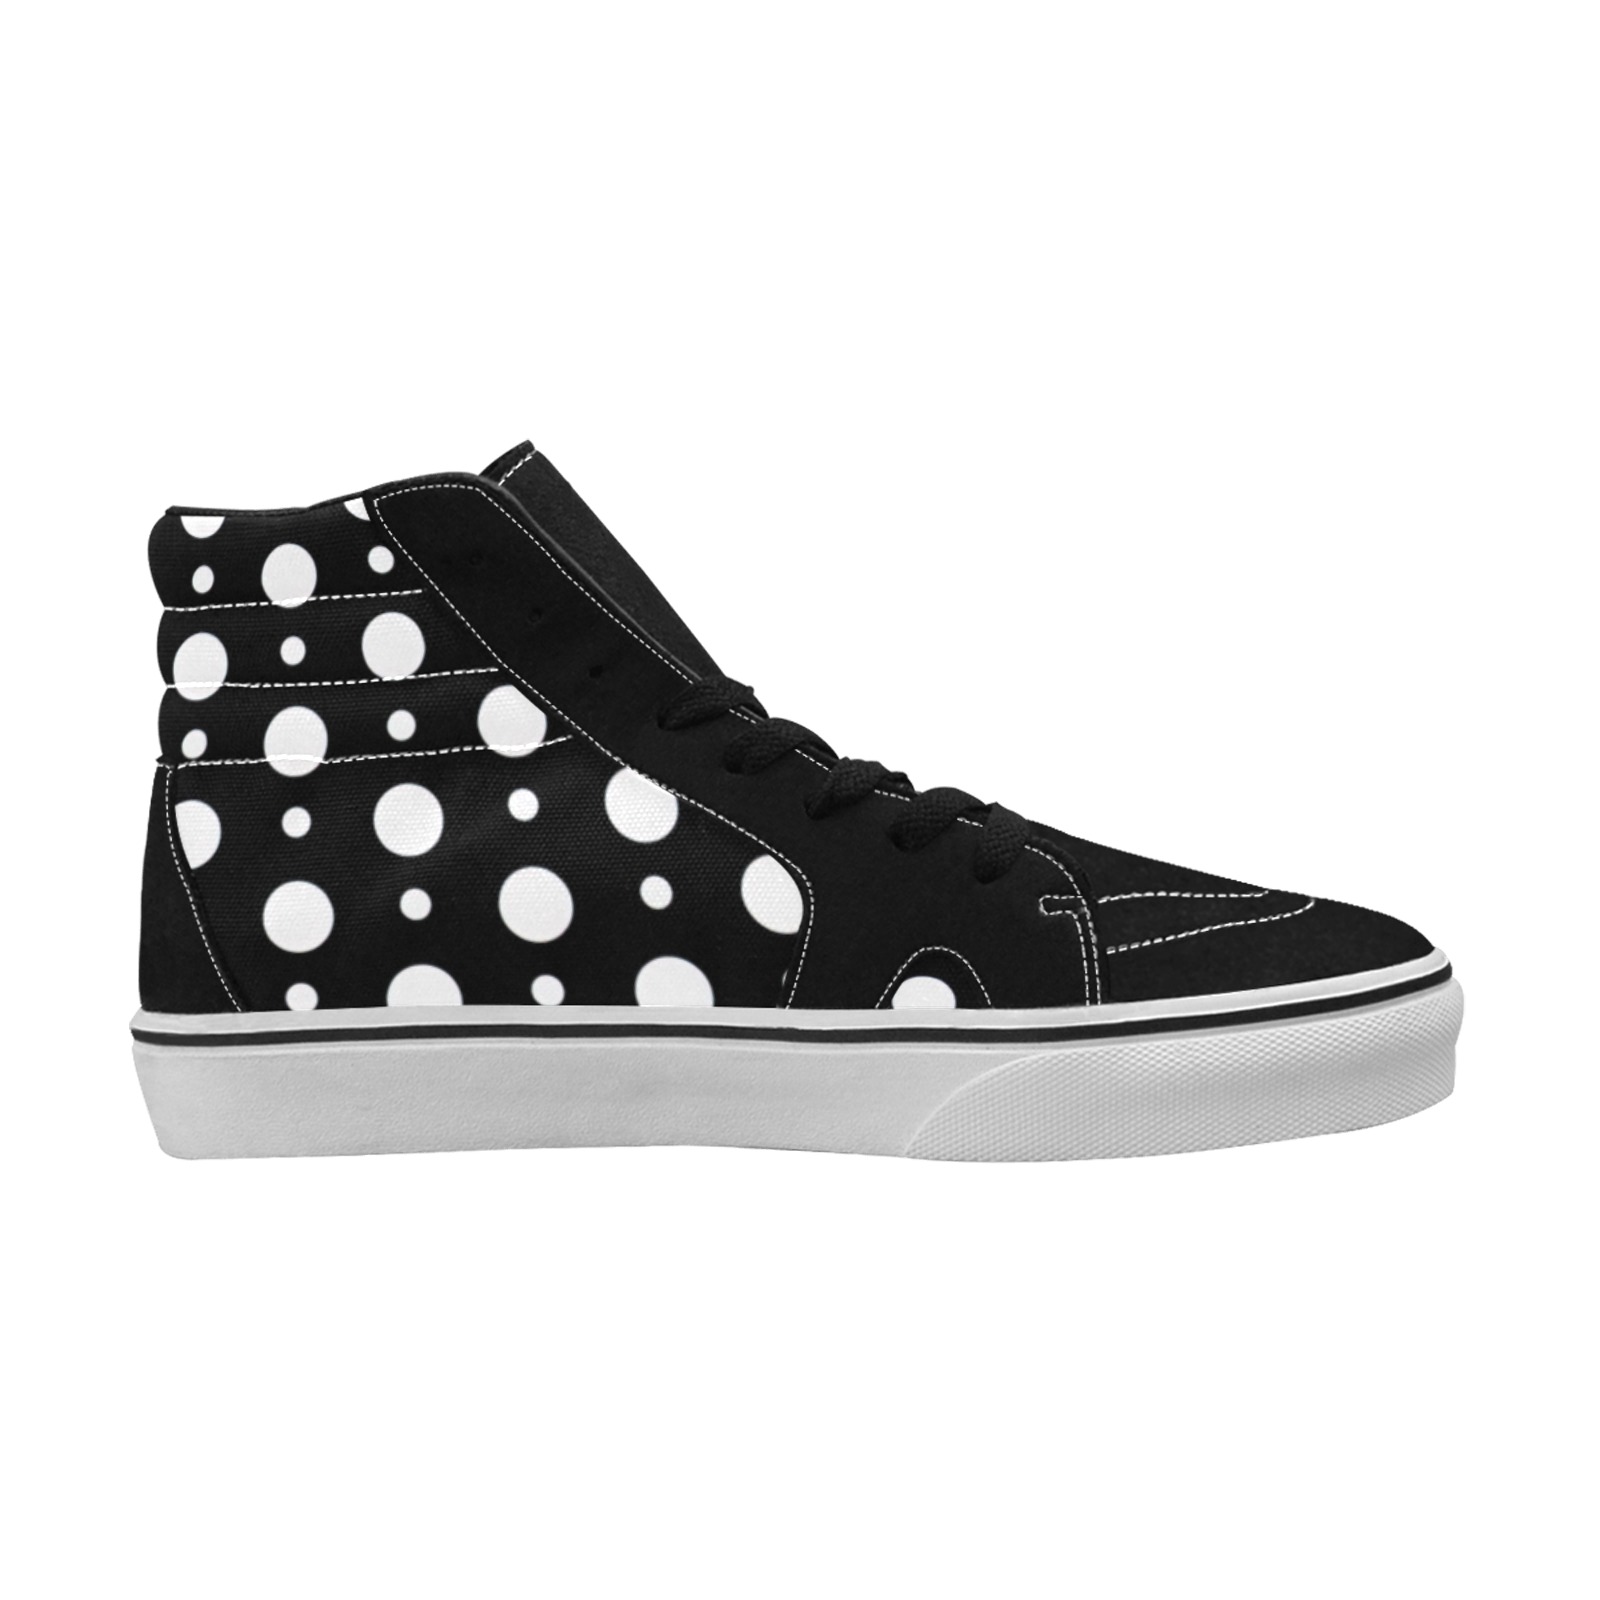 White Polka Dots Black Background Men's High Top Skateboarding Shoes (Model E001-1)